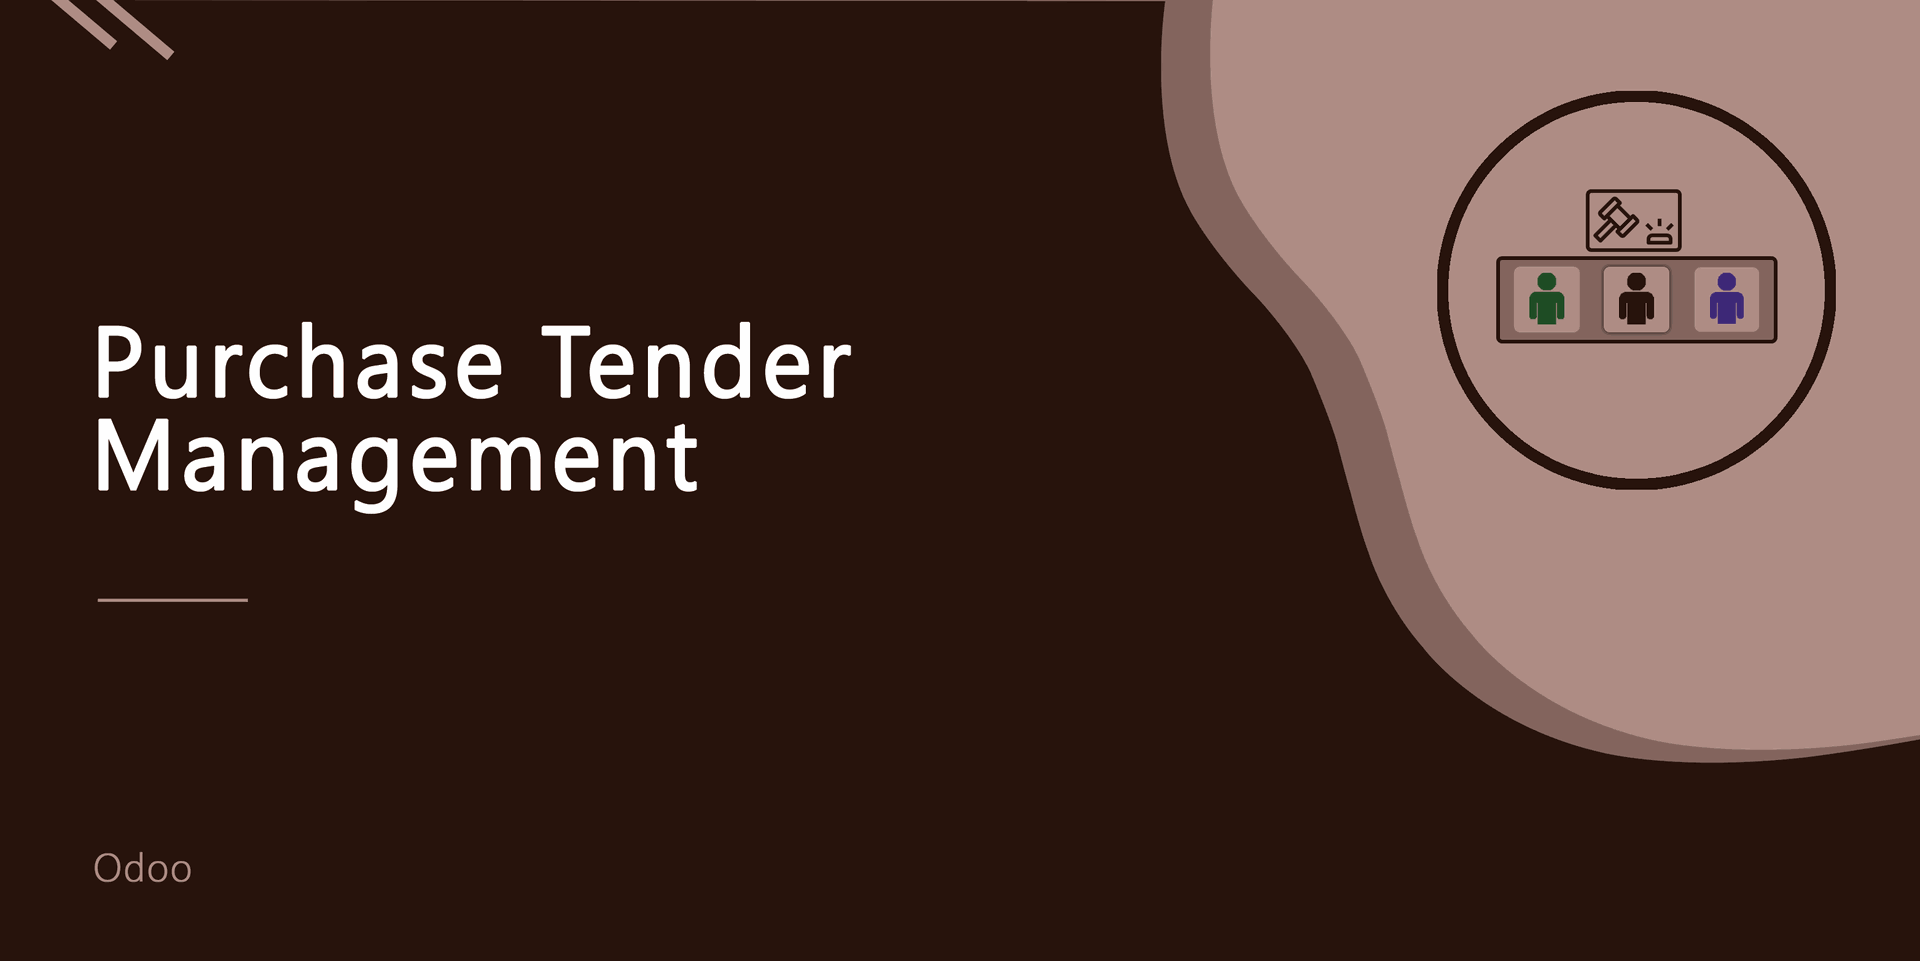 Purchase Tender Management
